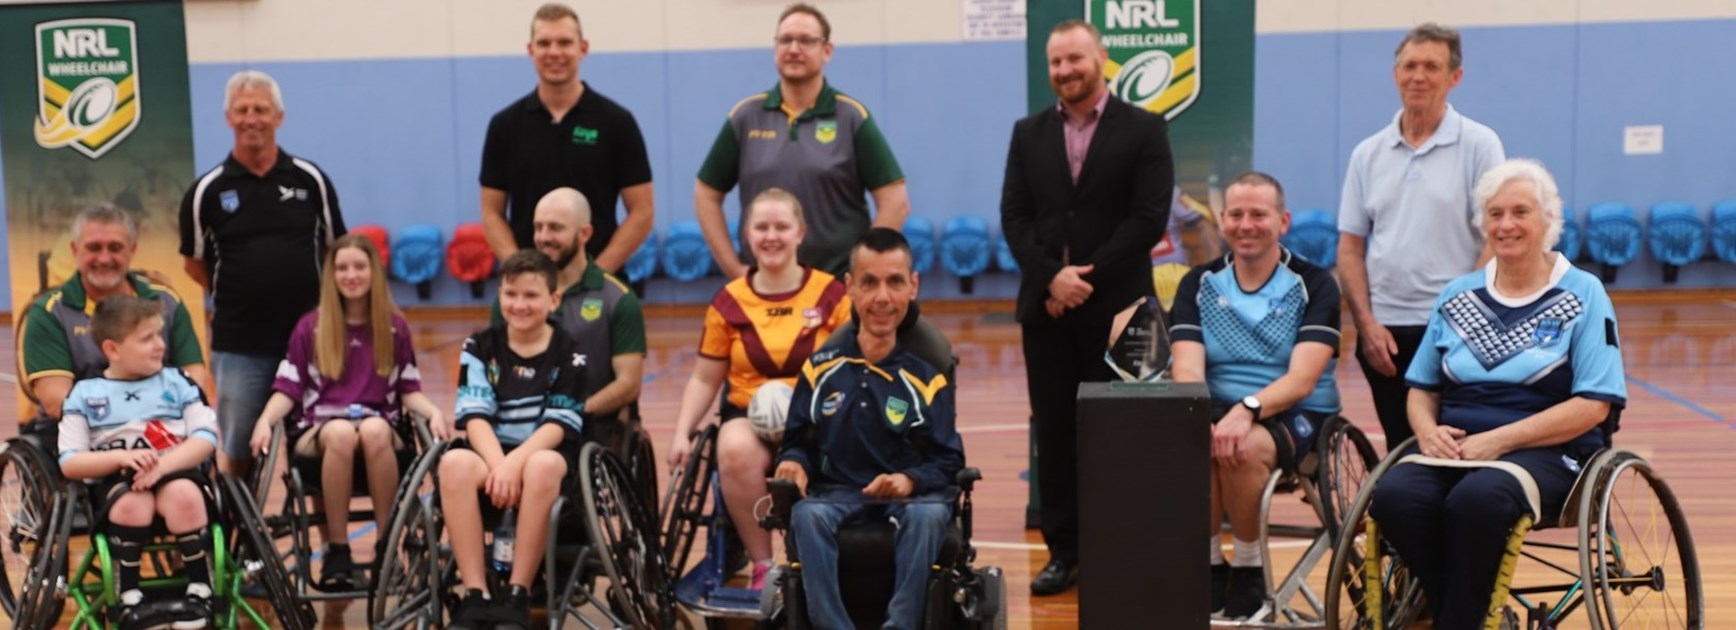 NRL pays tributes to the game's lifeblood in National Volunteer Week